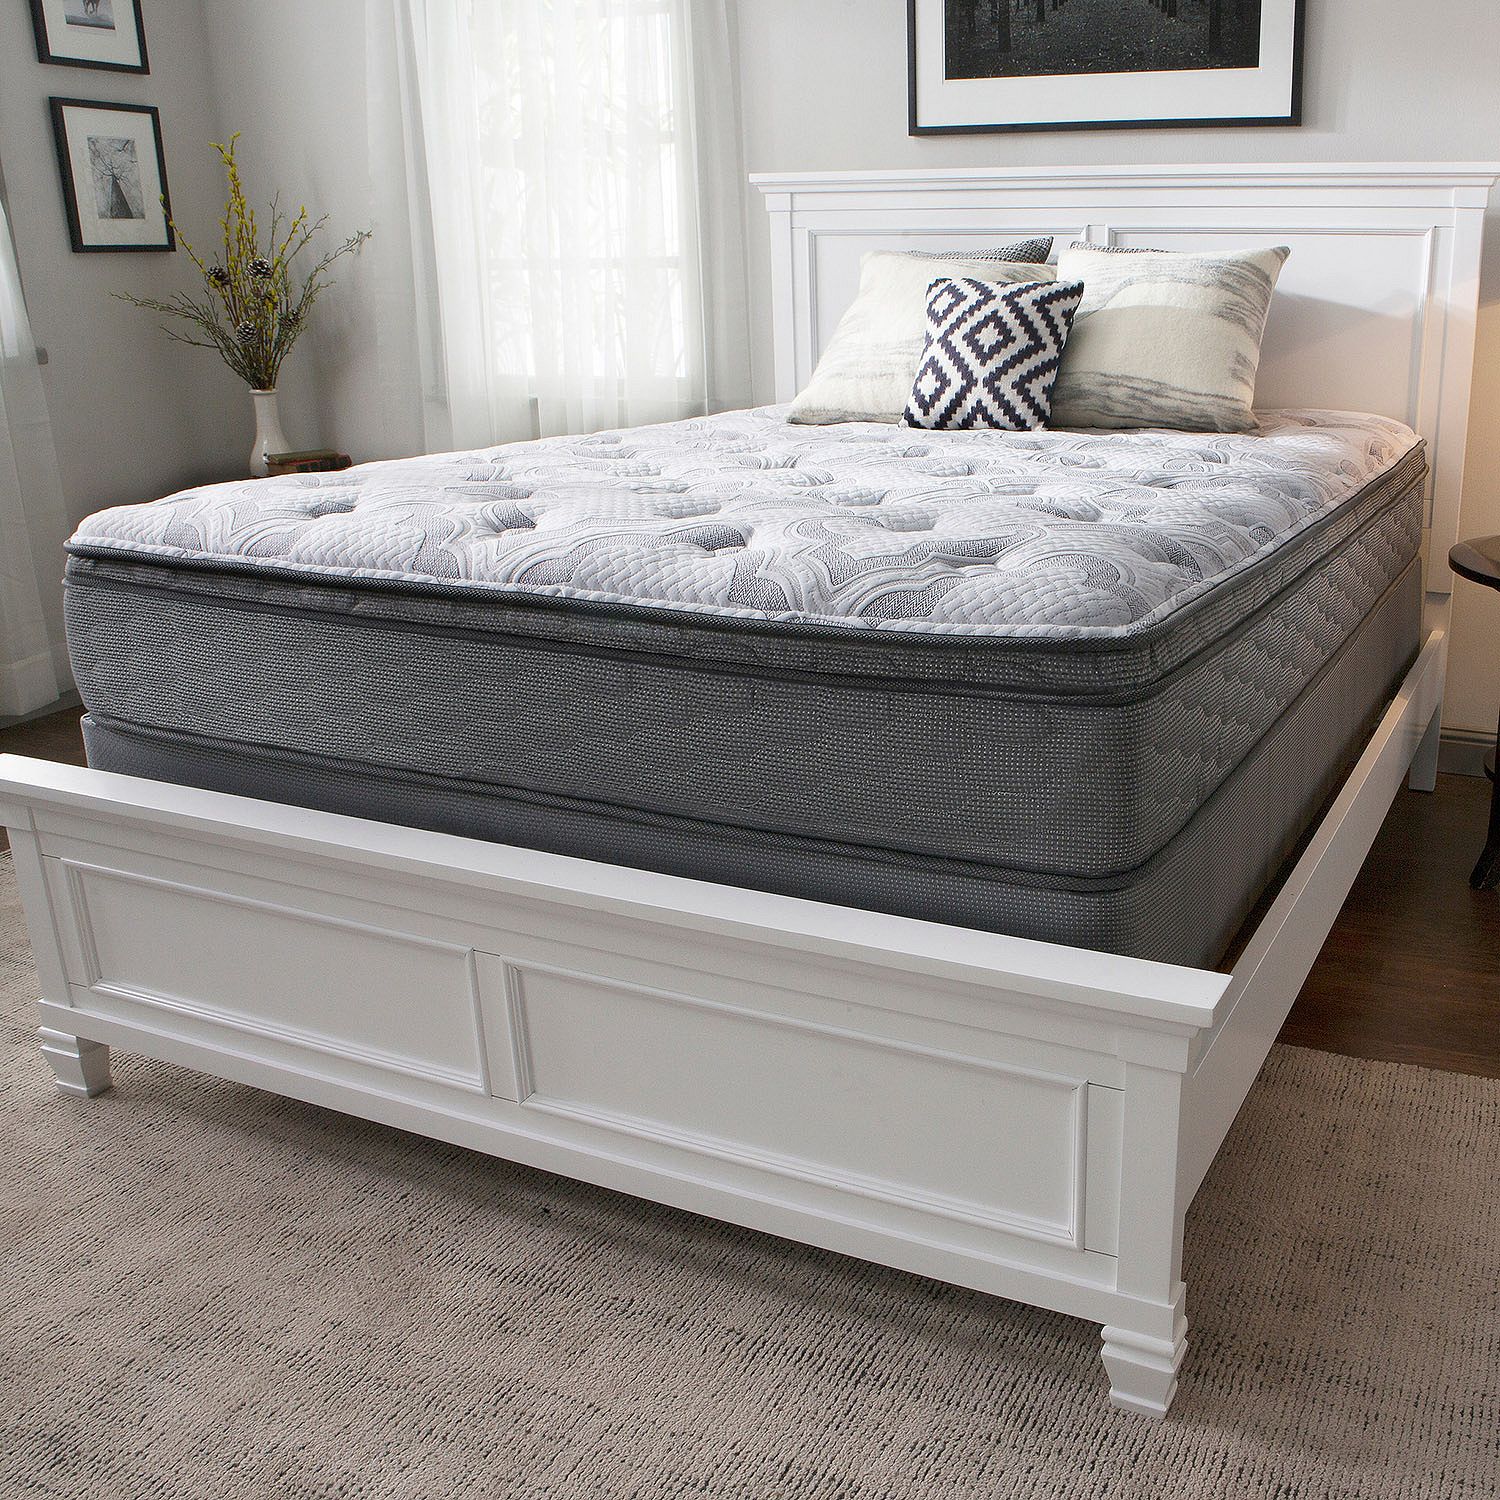 Serta Perfect Sleeper Woodbriar 3 series cushion firm queen mattress set for $398